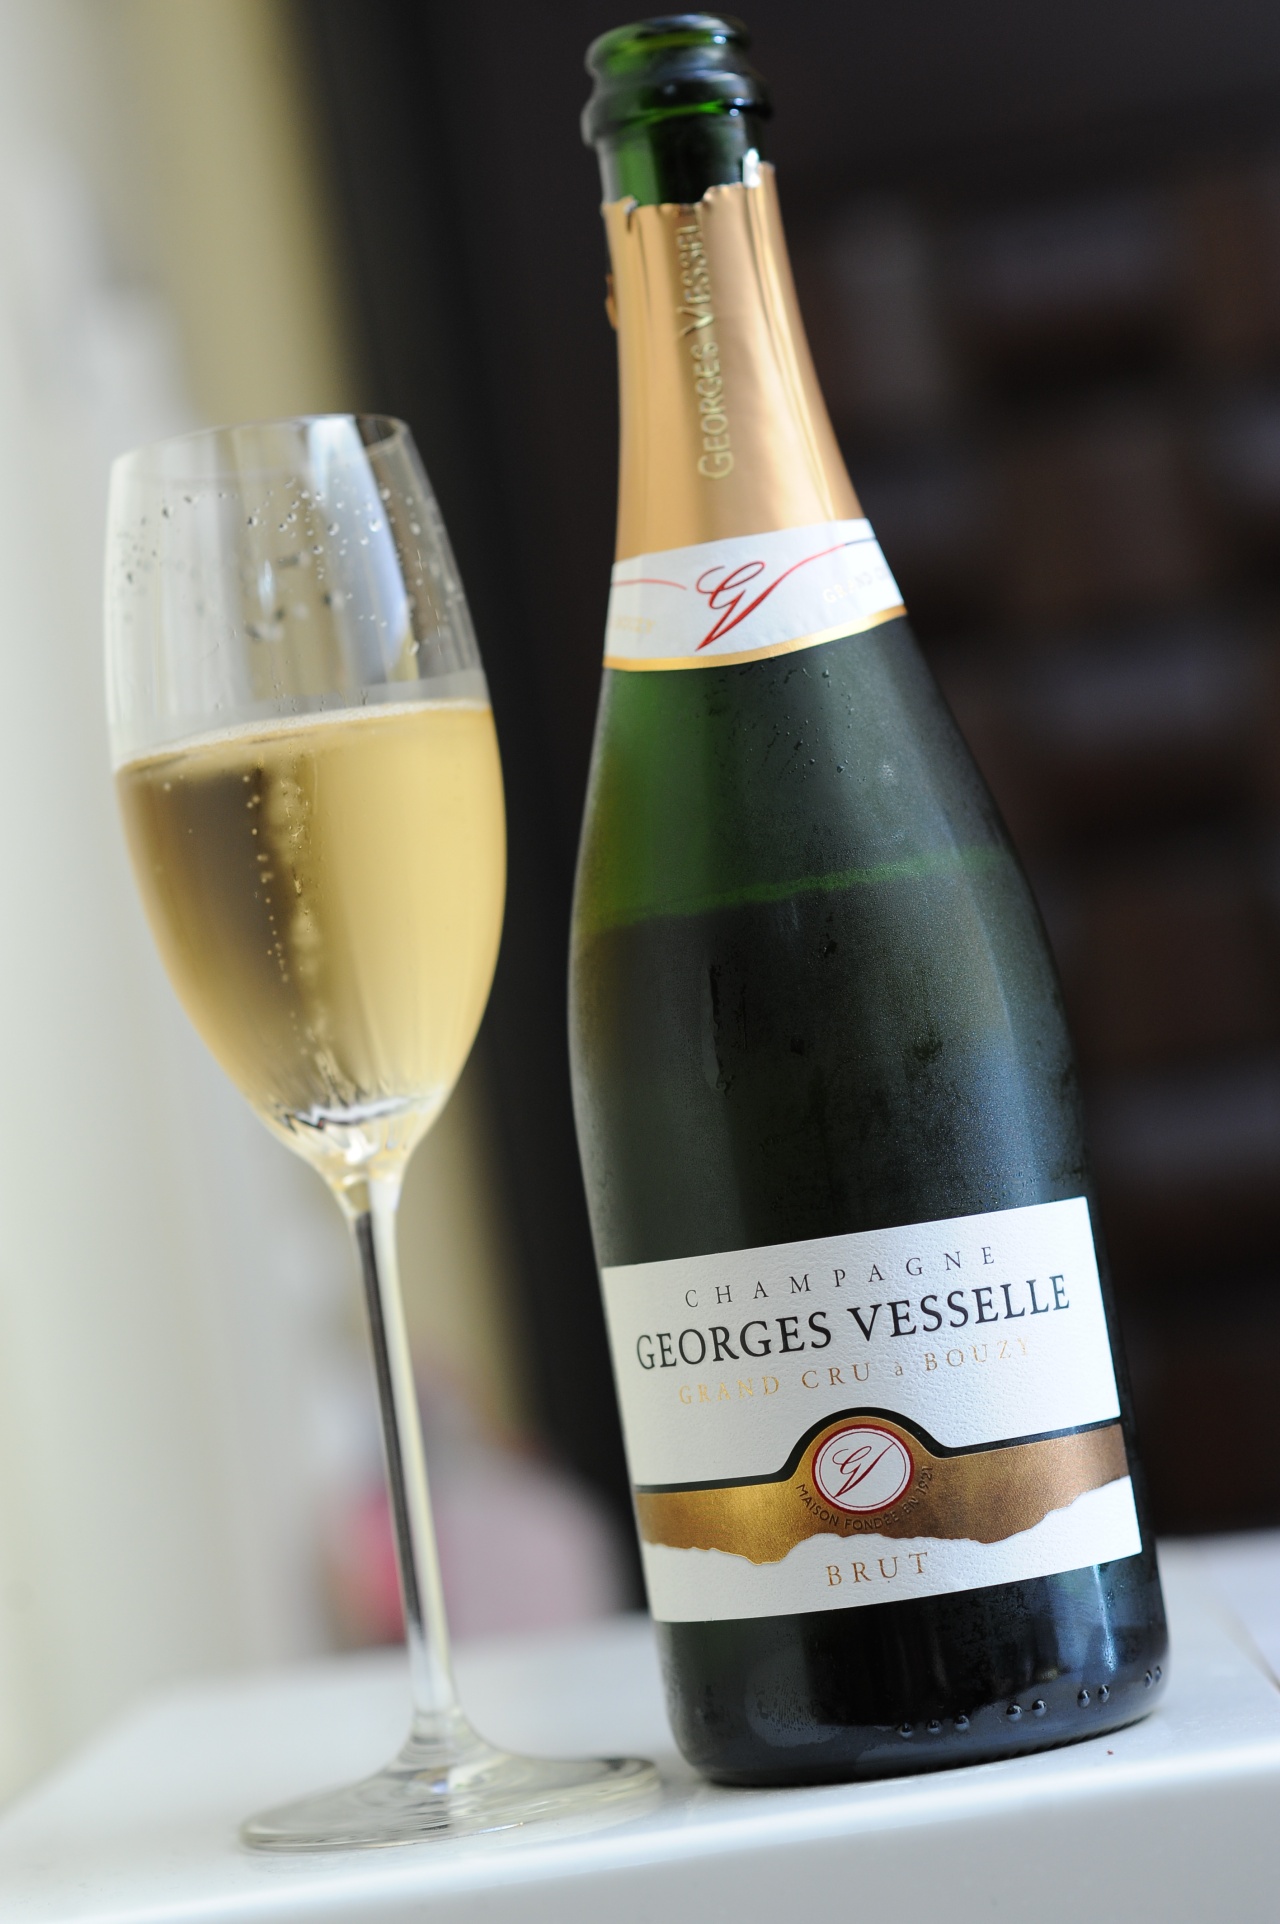 Georges Vesselle Brut Champagne Crand Cru Bouzy